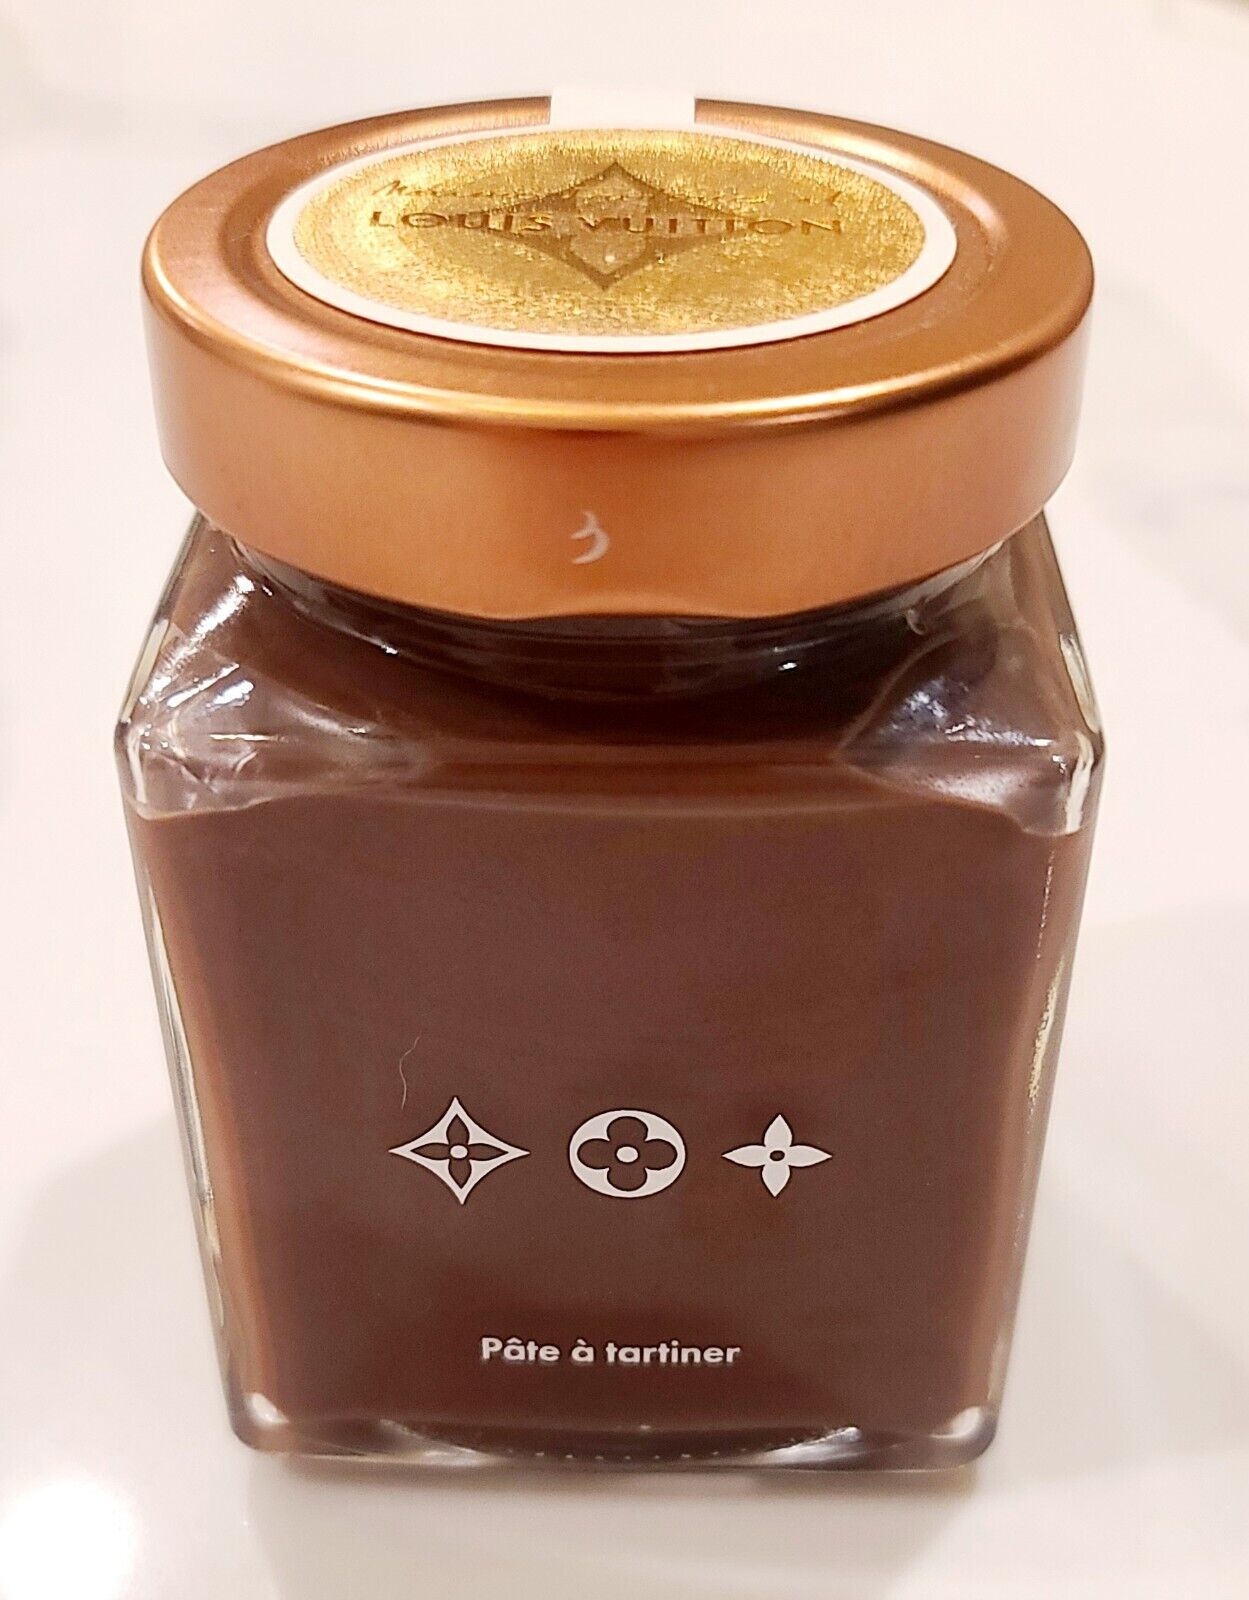 Louis Vuitton Jar Hazelnut Chocolate and Vanilla Spread 11.64 oz. 330g France